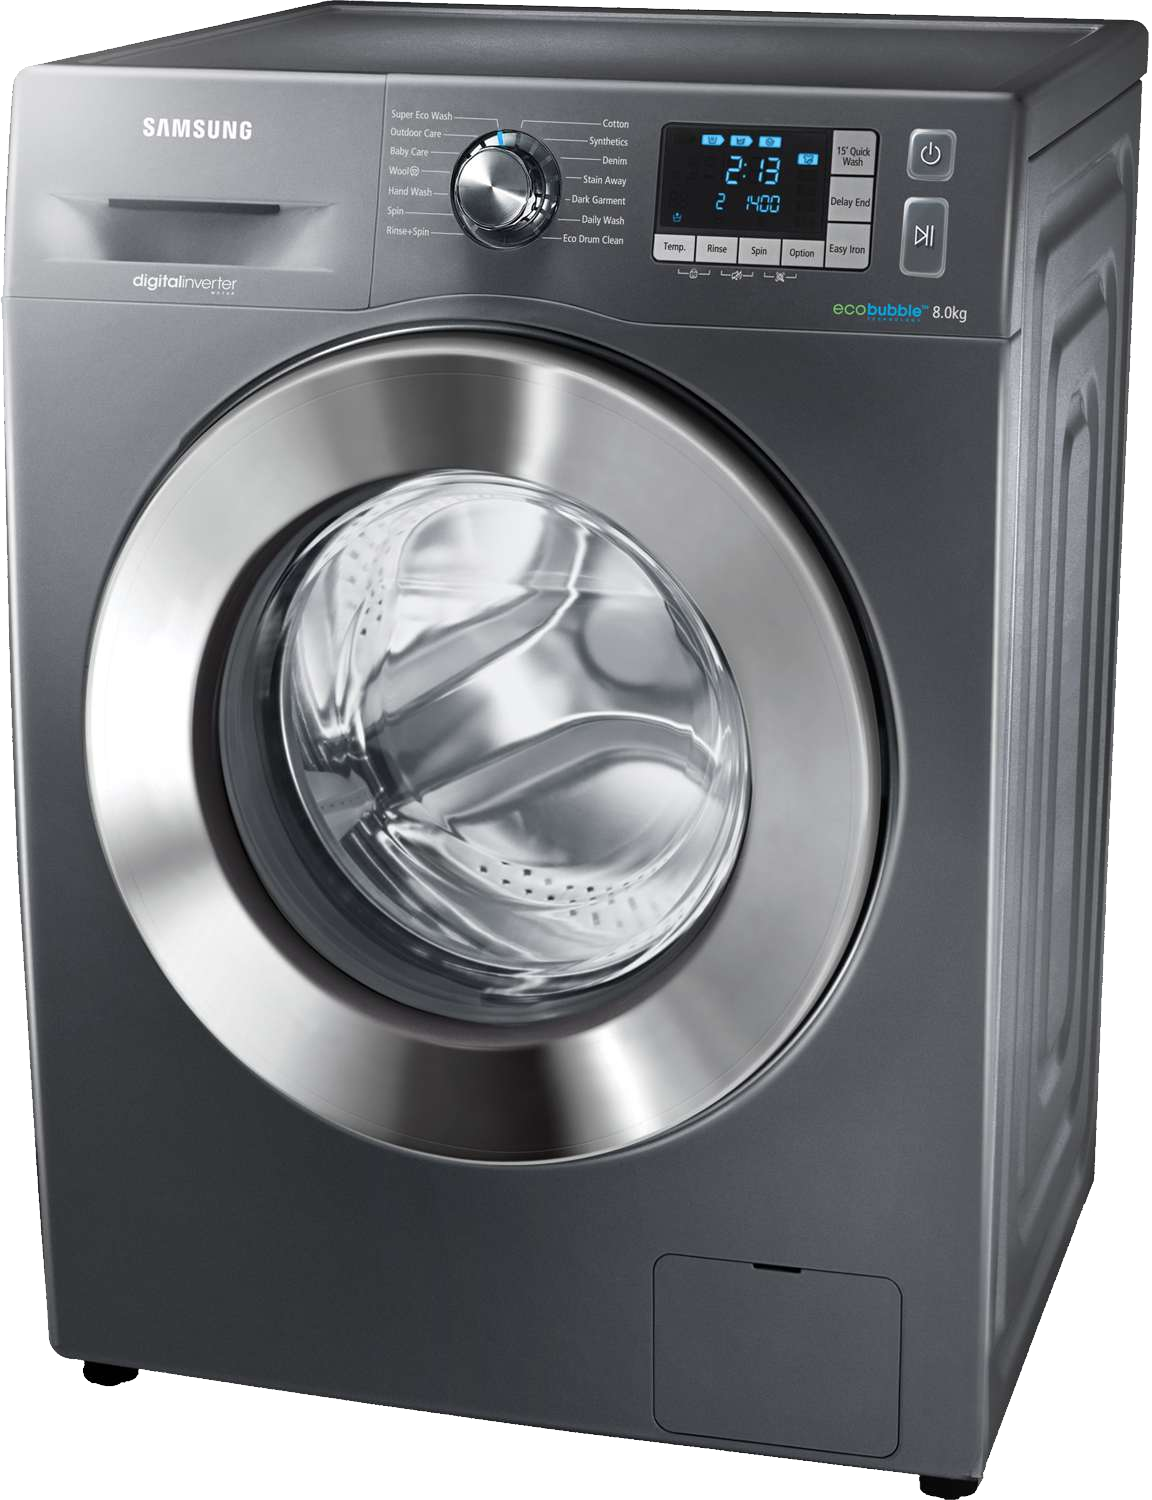 Laundry Washing Machine PNG Free File Download